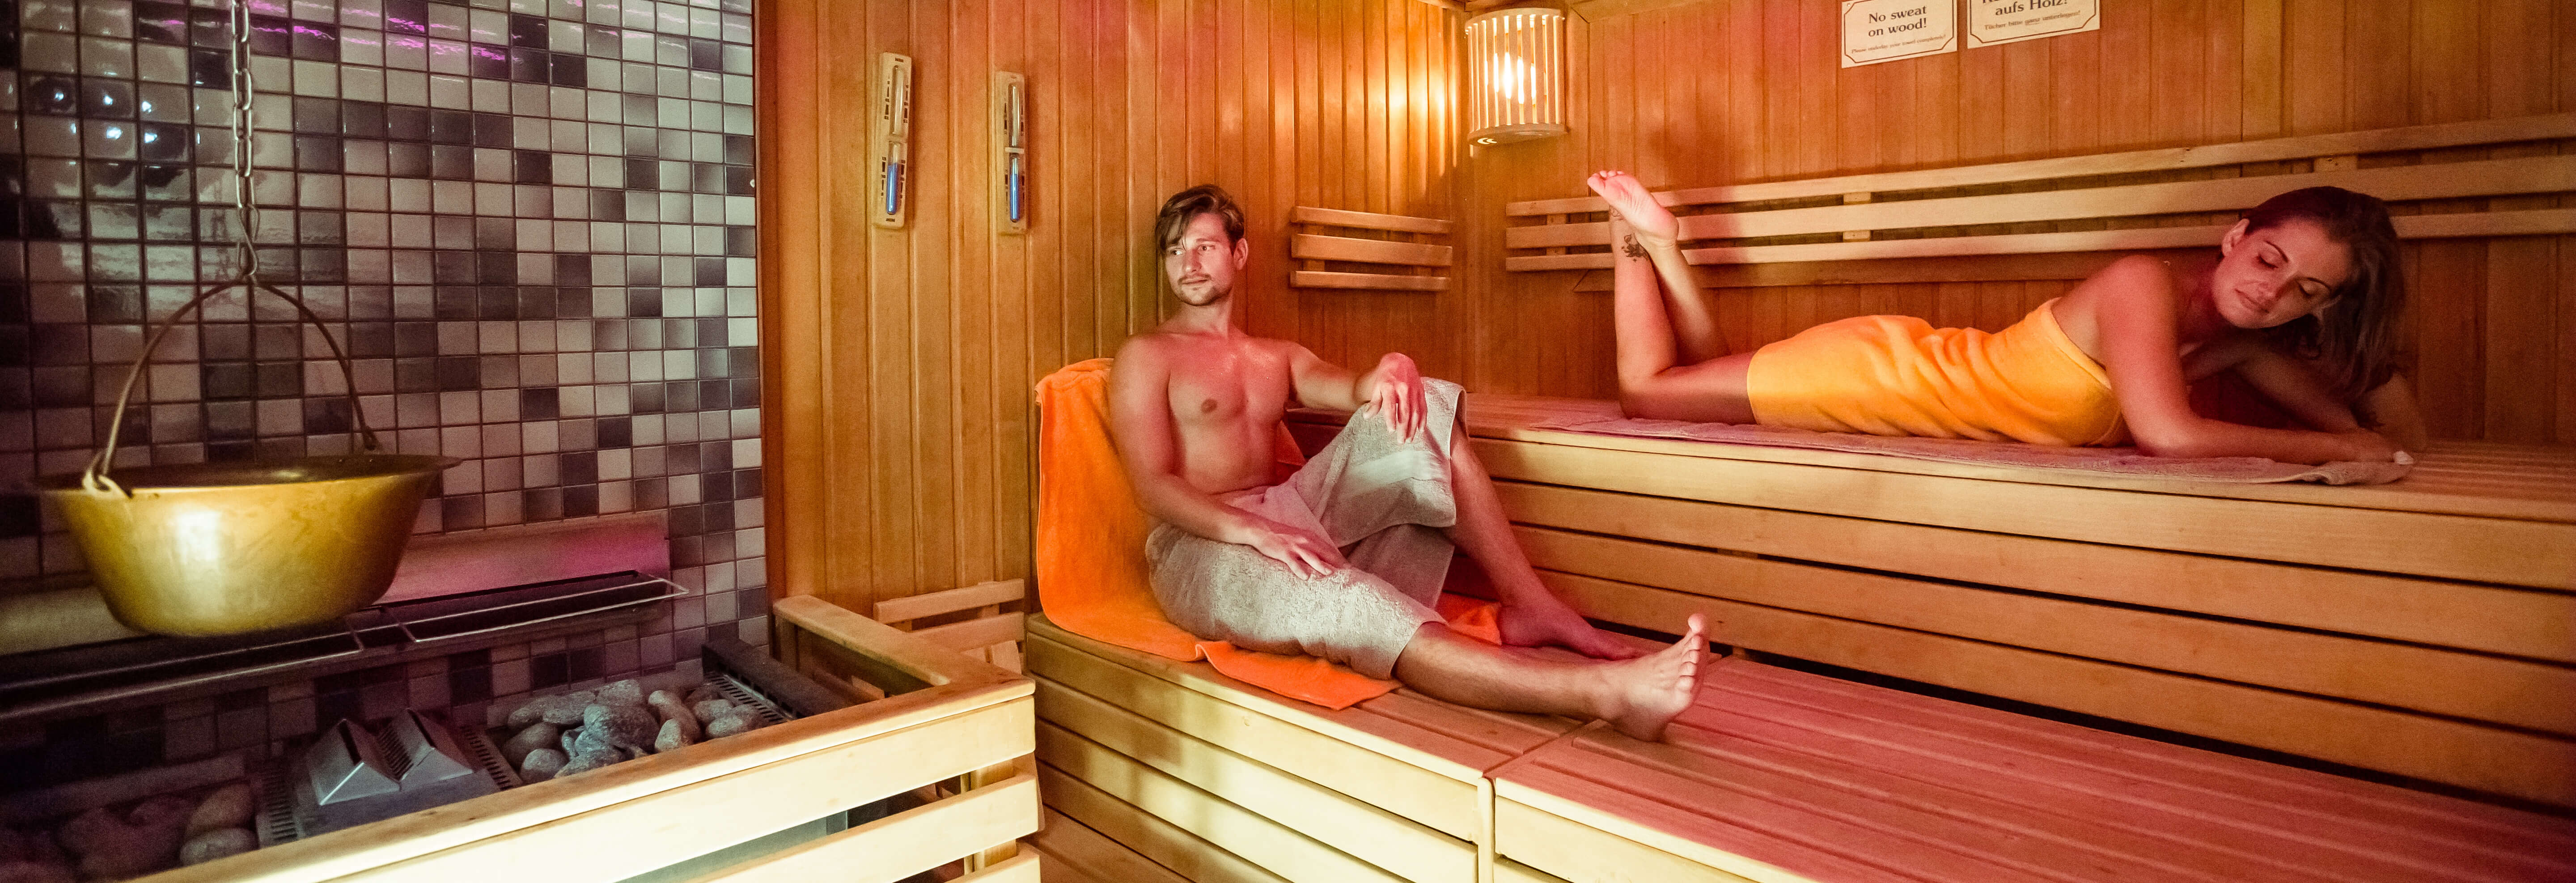 Nordbad sauna